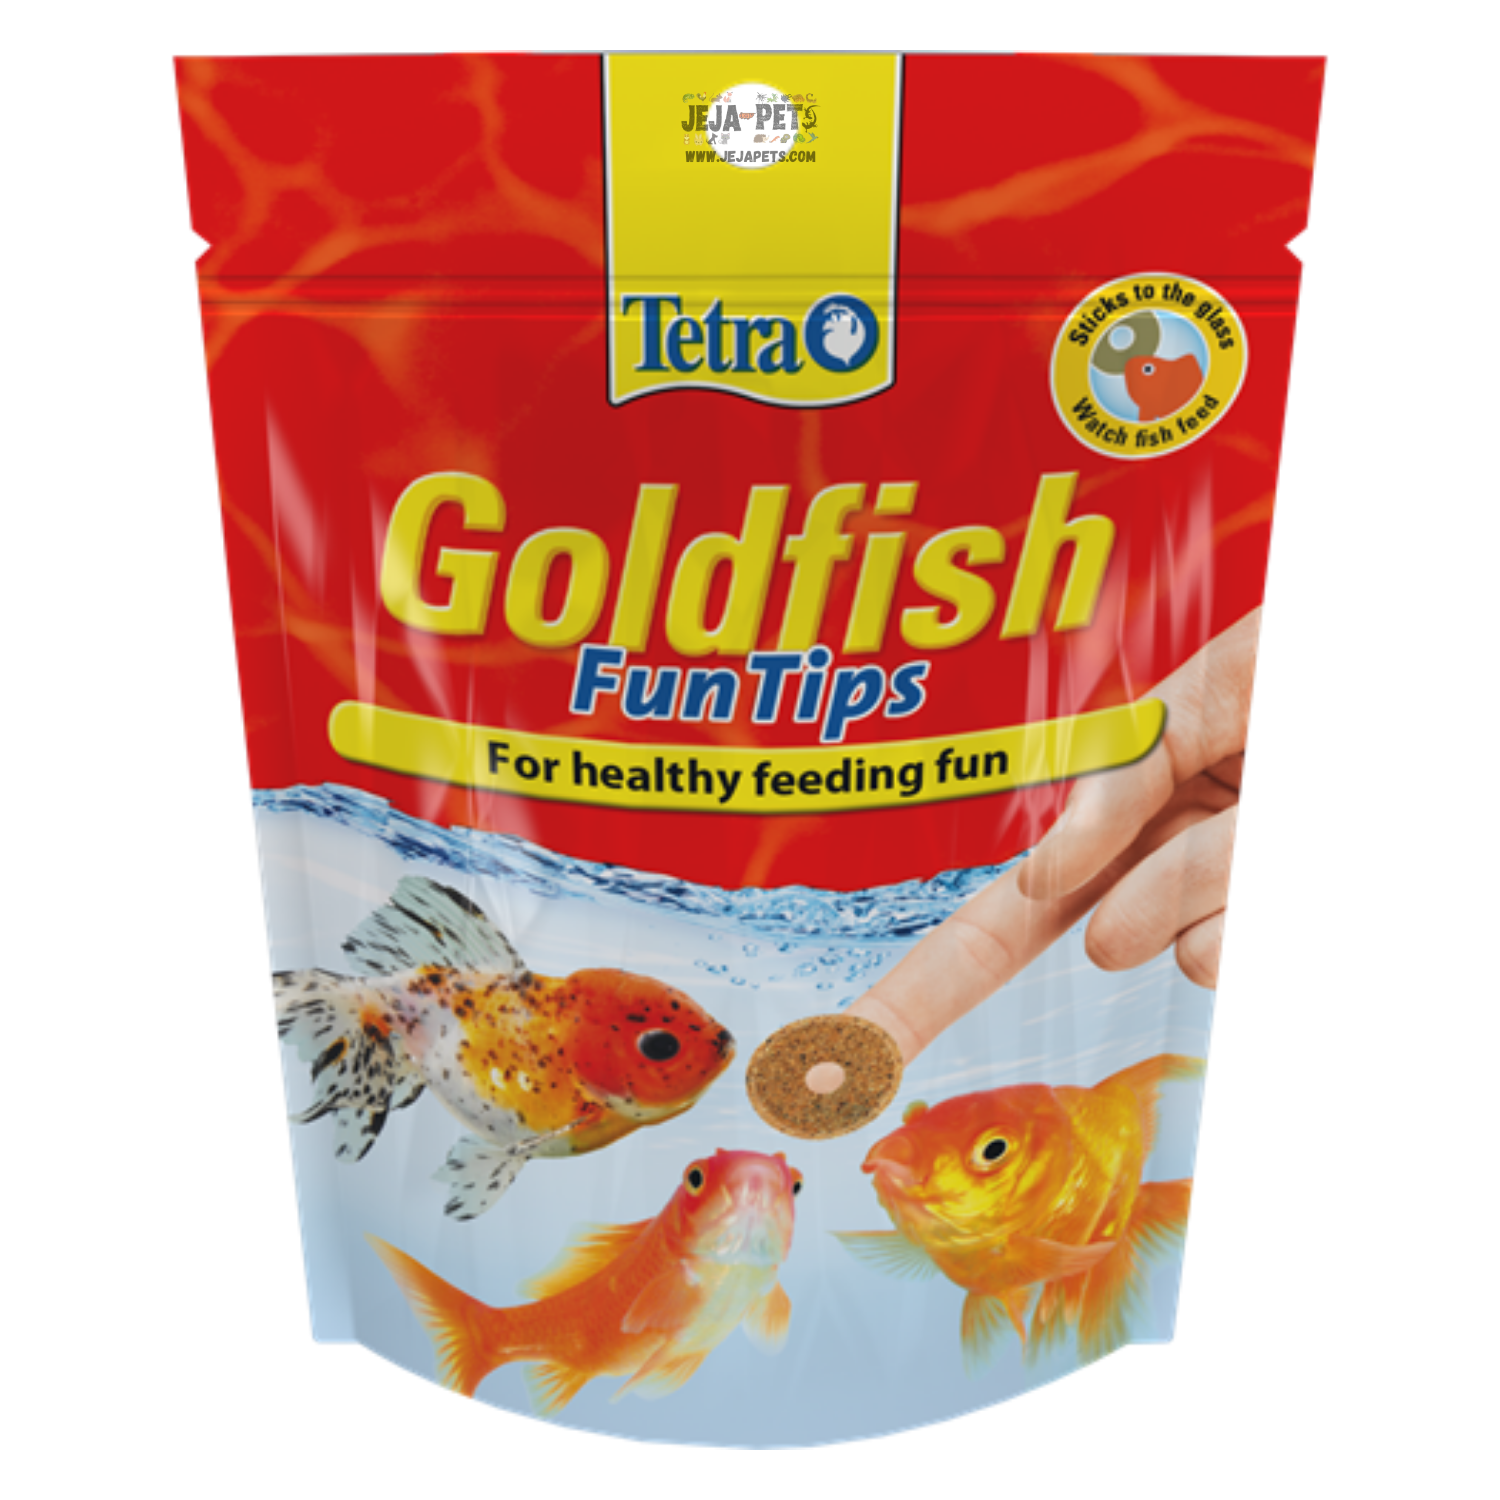 Tetra Goldfish Menu online kopen? →